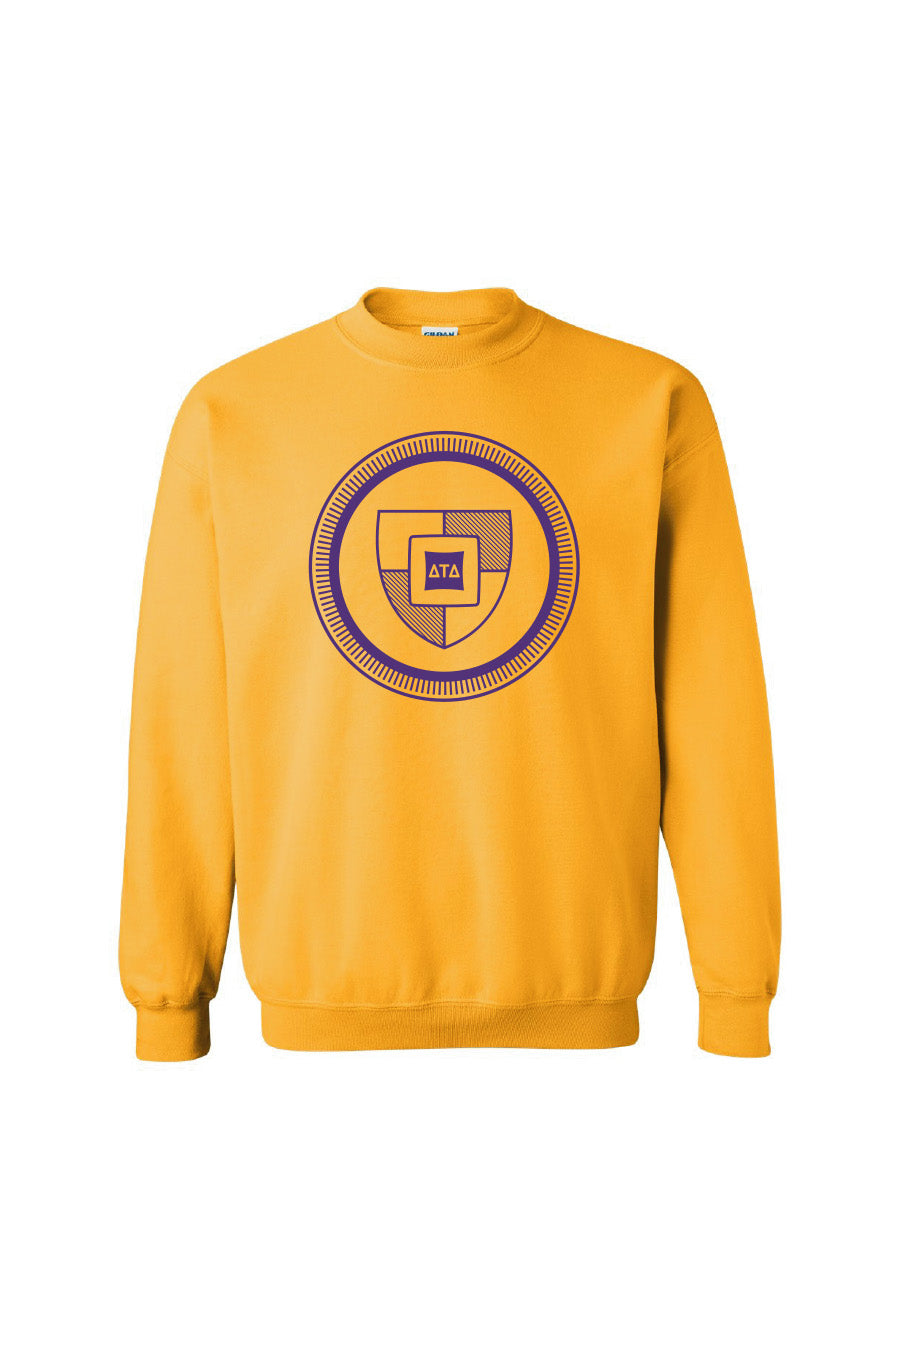 Forging the Future Crew Neck Sweatshirt- Gold